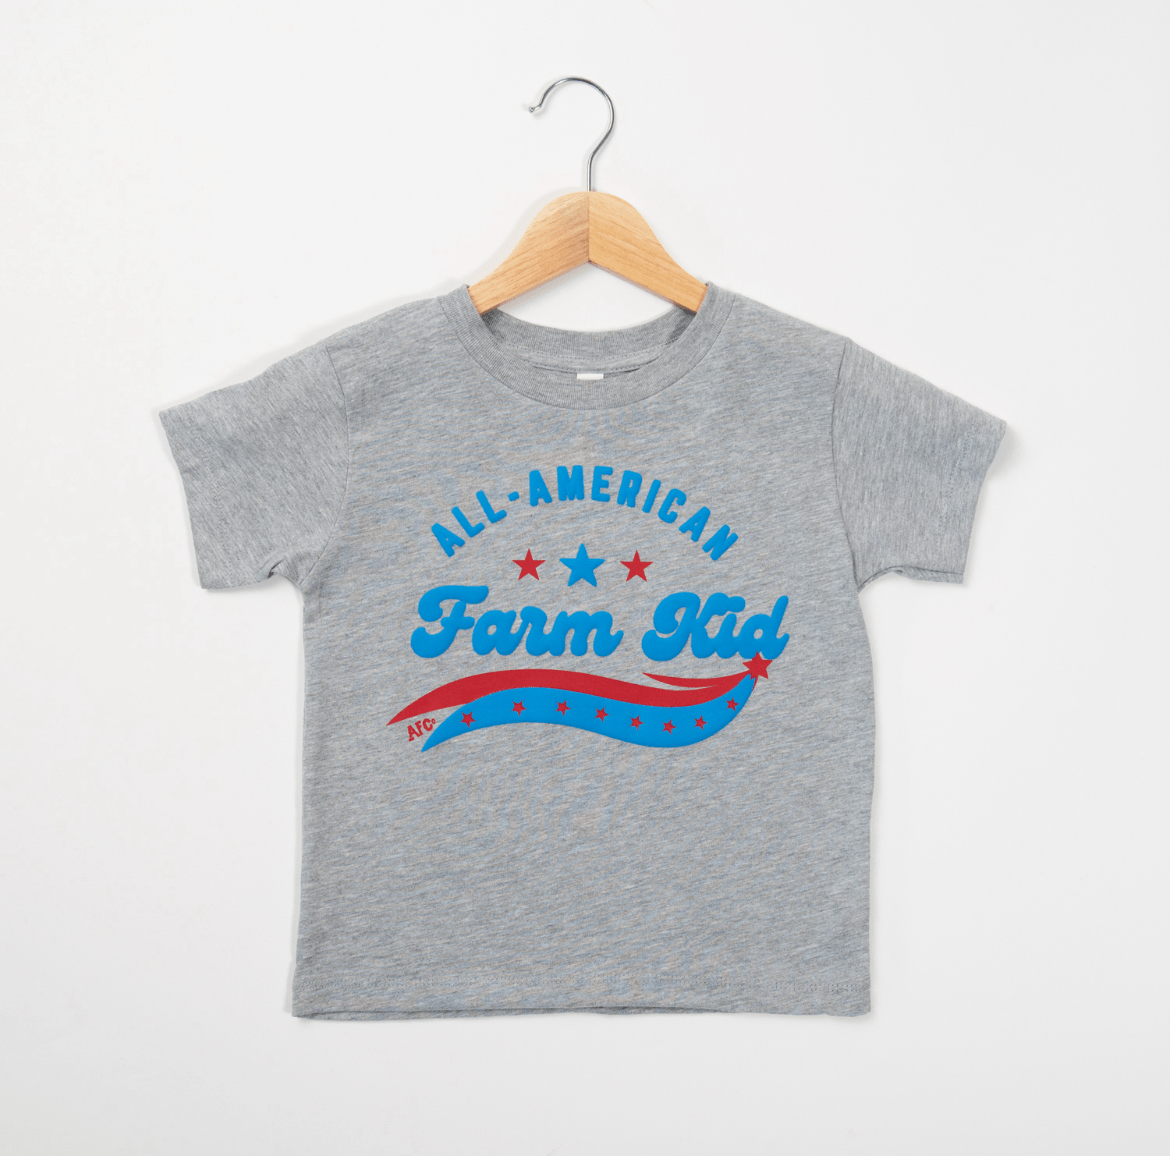 American Farm Company Shirts 'All-American Farm Kid' Grey Tee